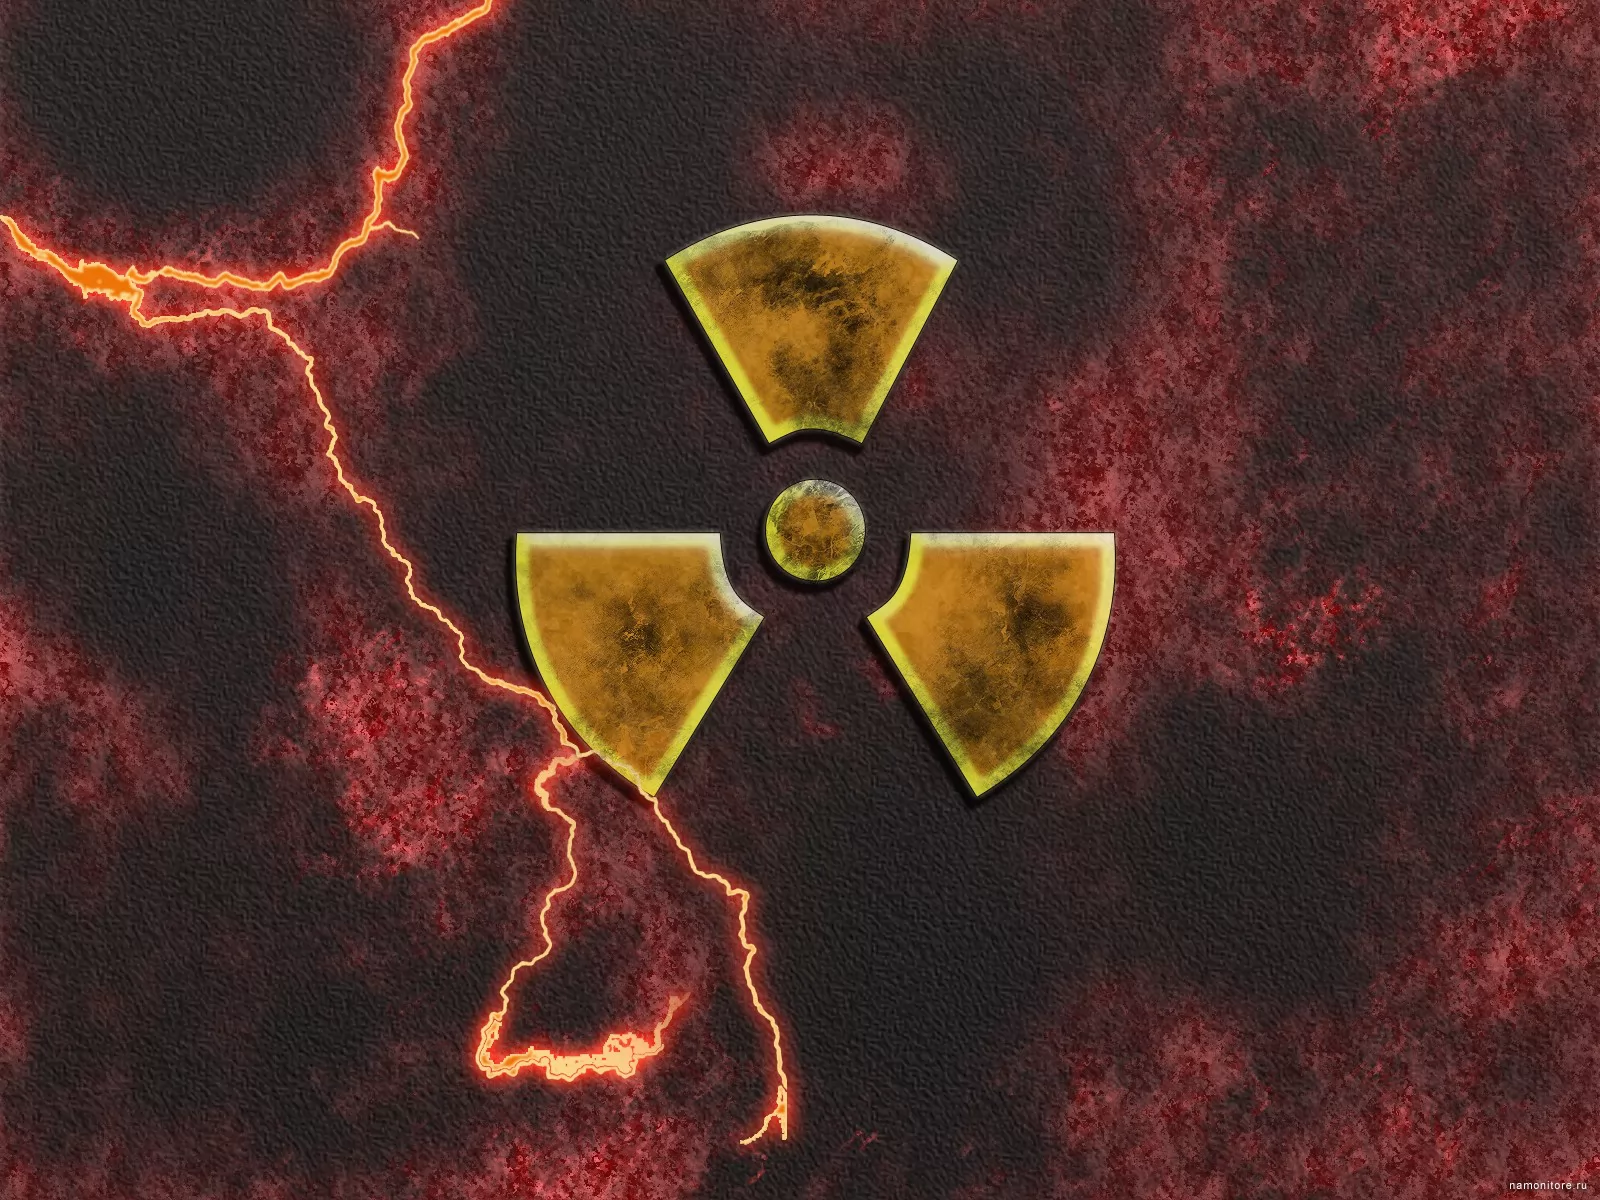 Фото радиации. Знак радиоактивности сталкер. Знак радиации сталкер монолит. Изображение радиации. Stalker радиация.